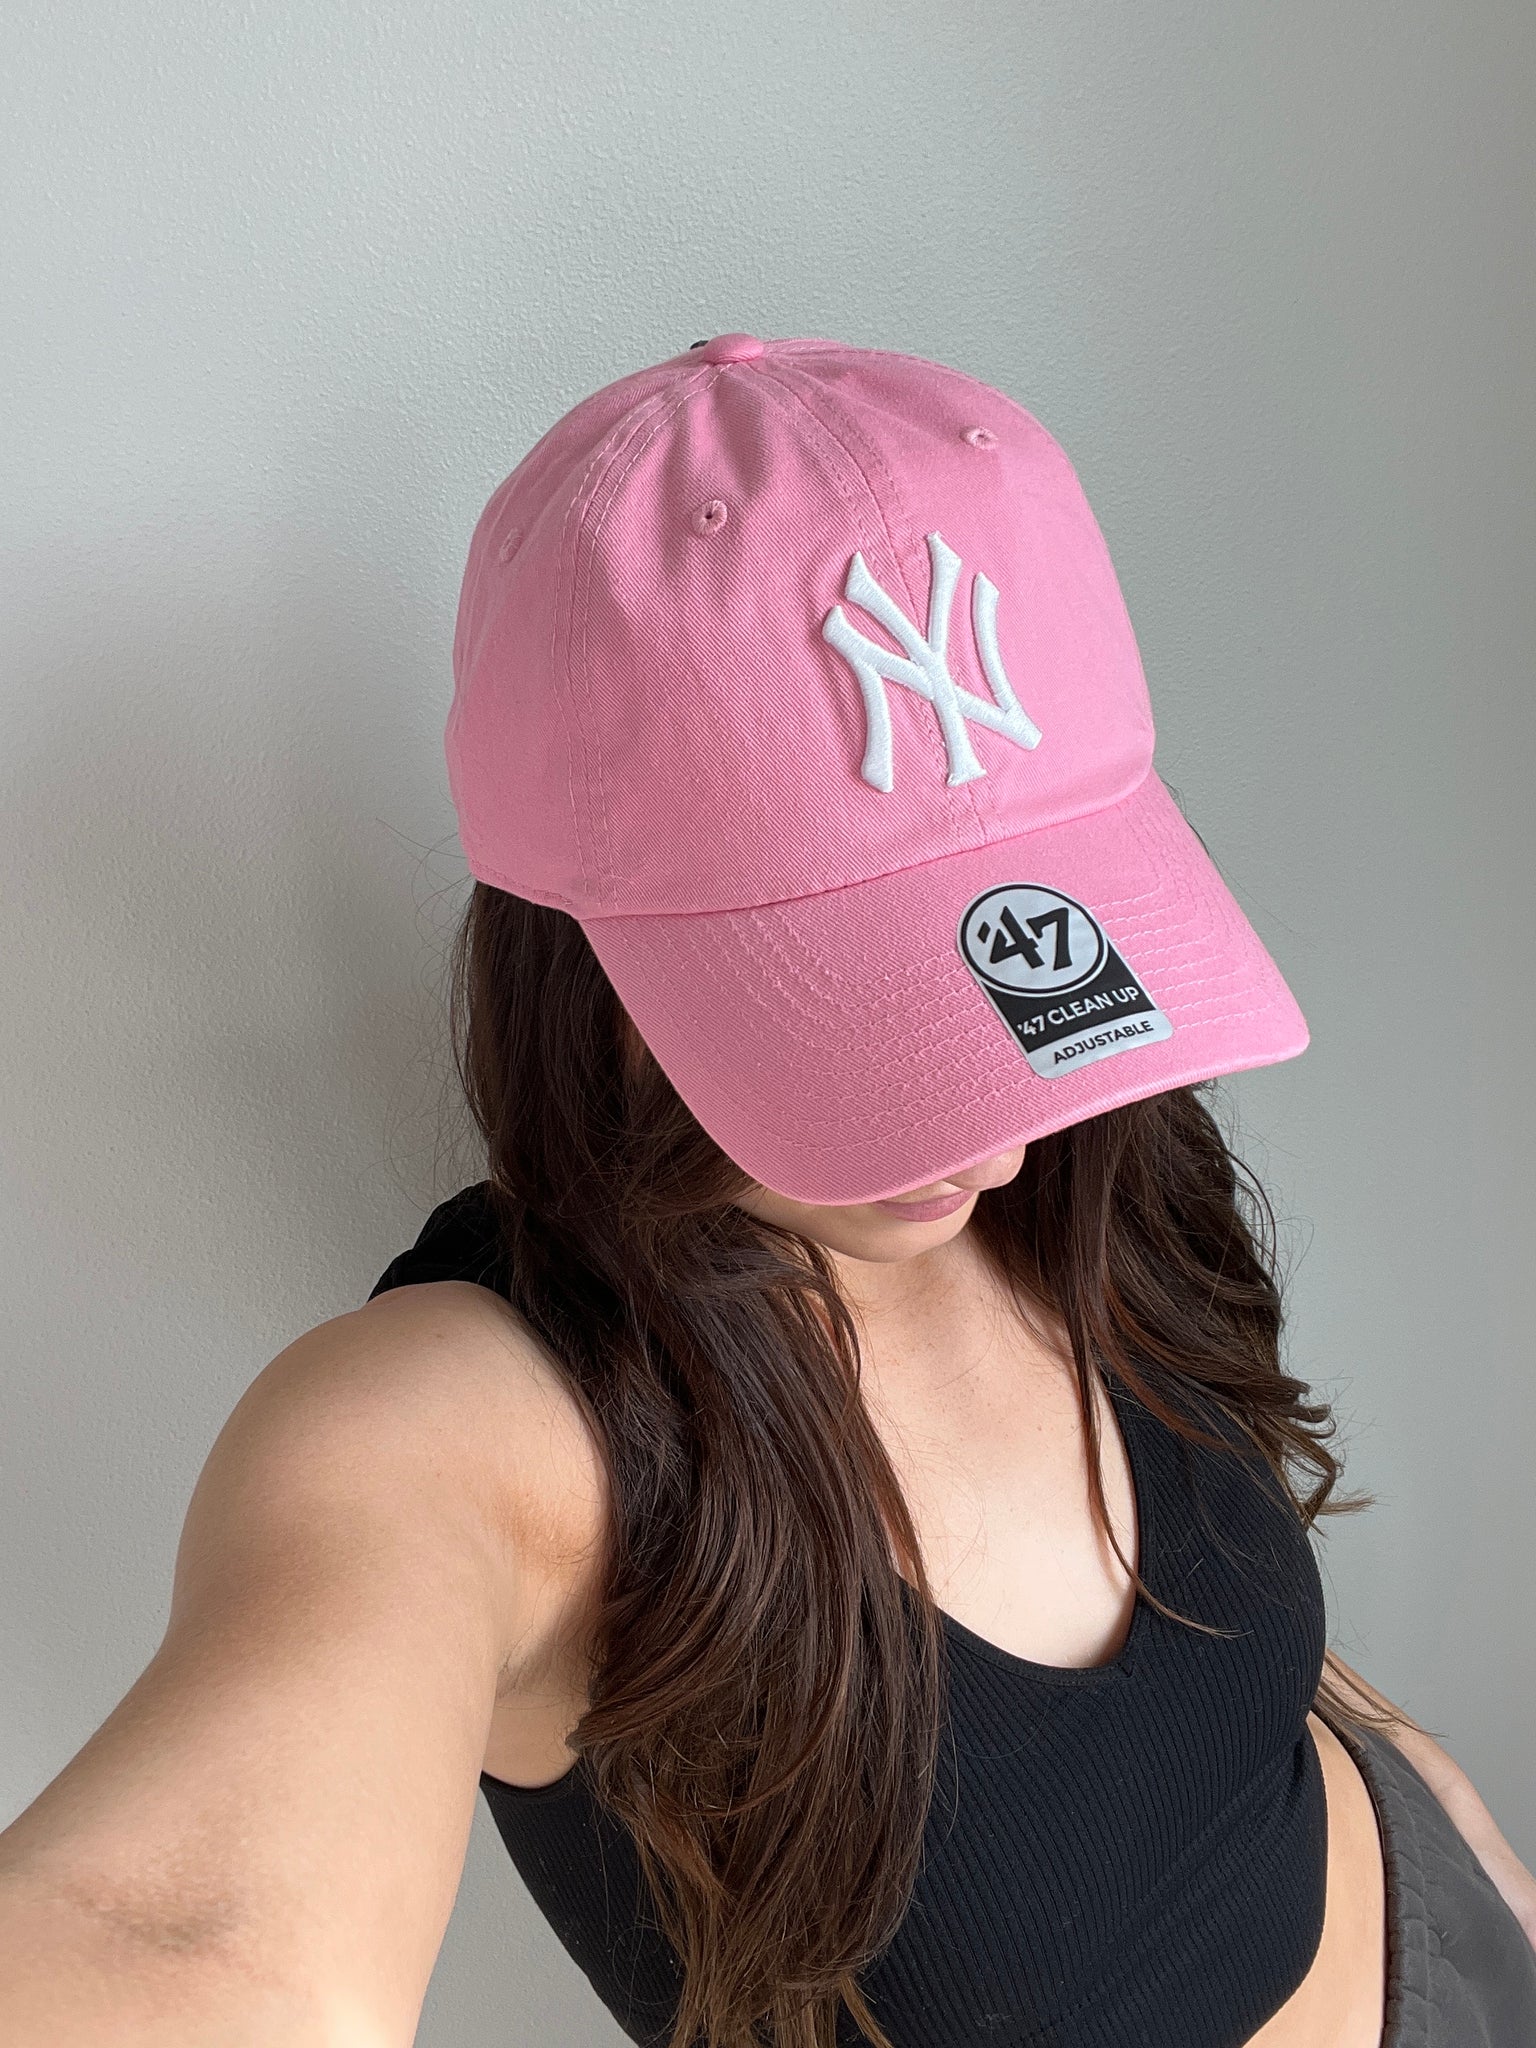 47 New York Yankees Baseball Hat